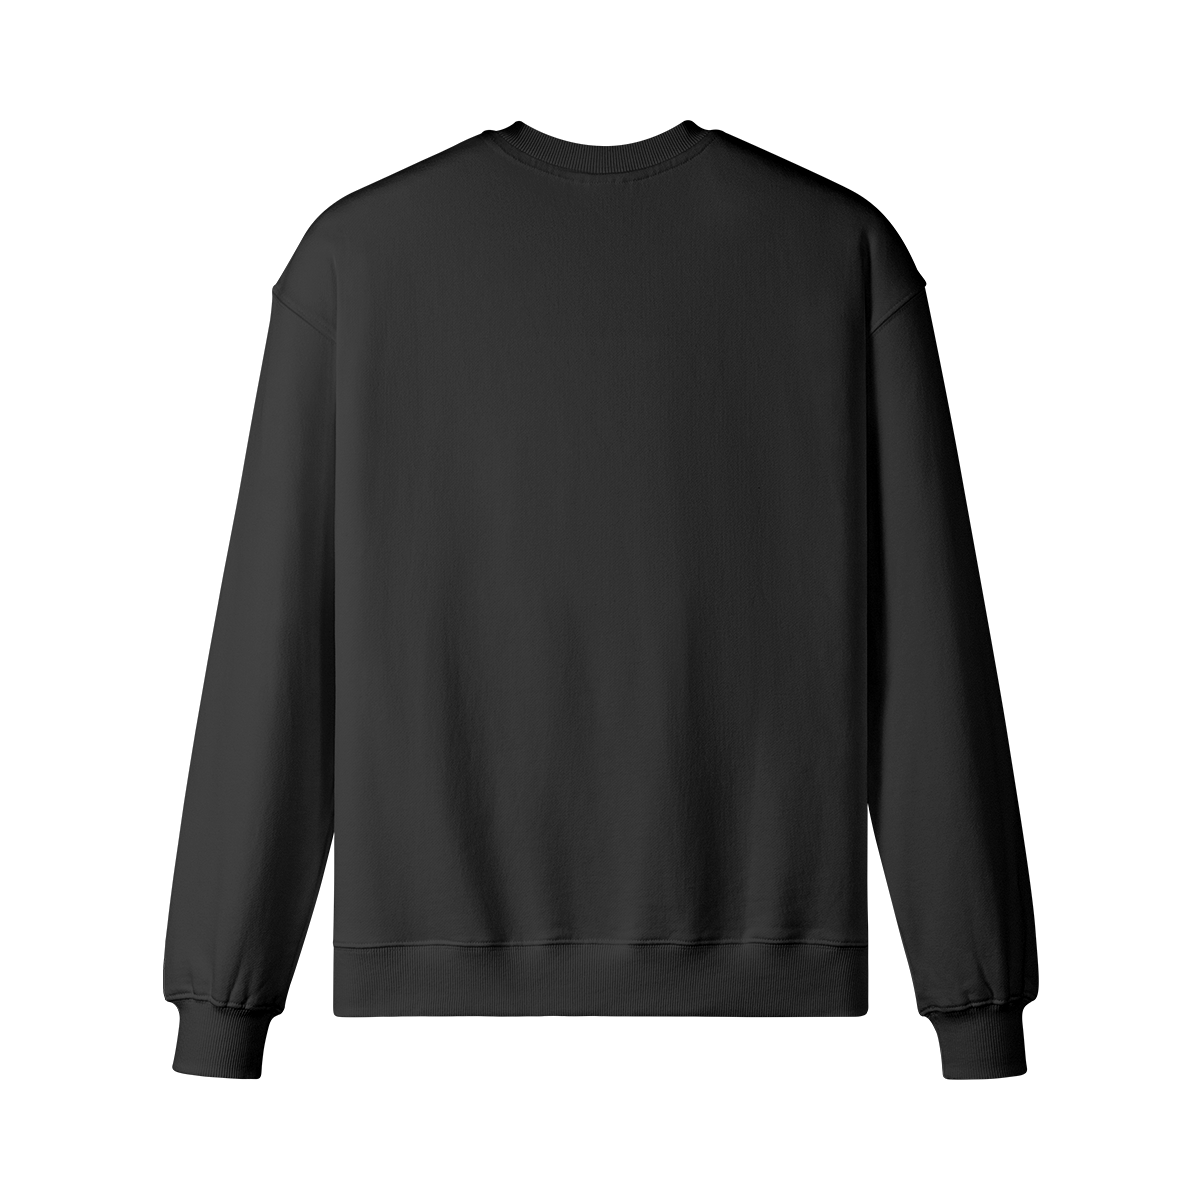 TECHNO - Unisex Oversized Sweatshirt